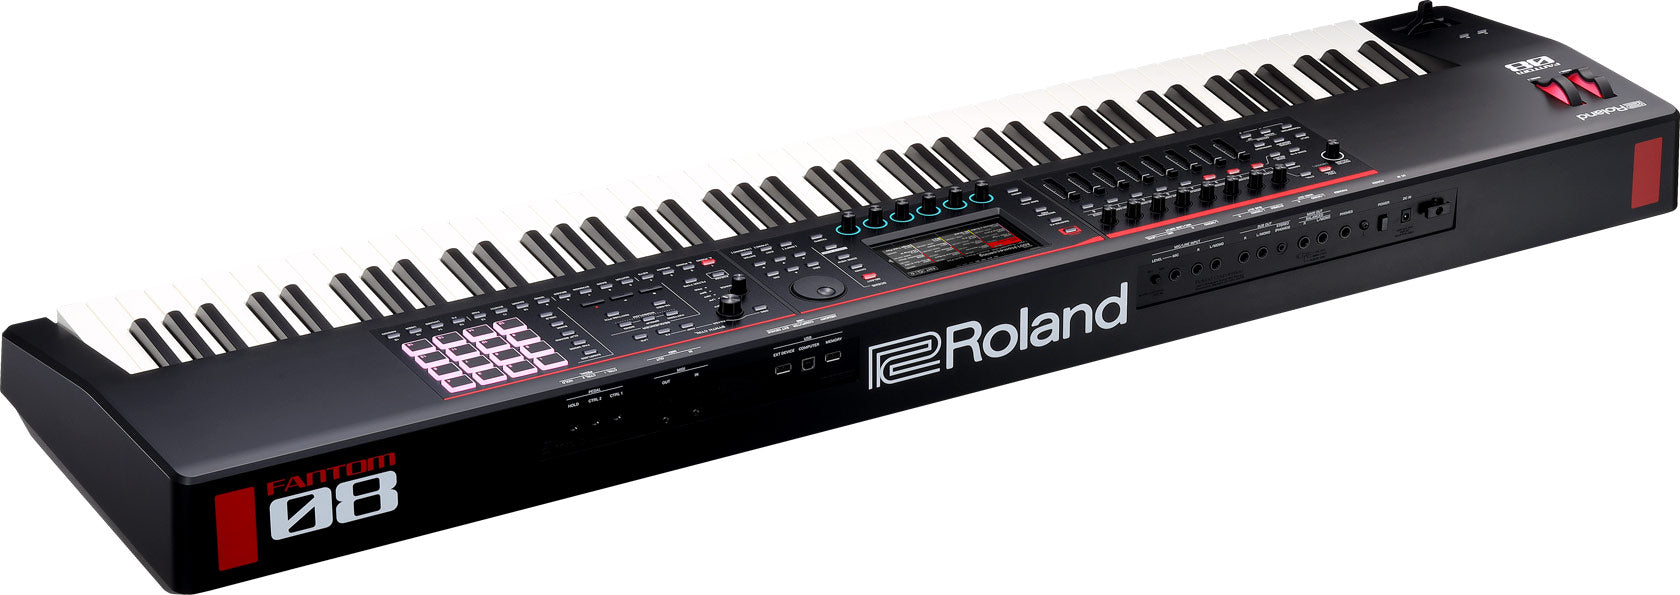 Roland FANTOM-08 88-Key Workstation Keyboard